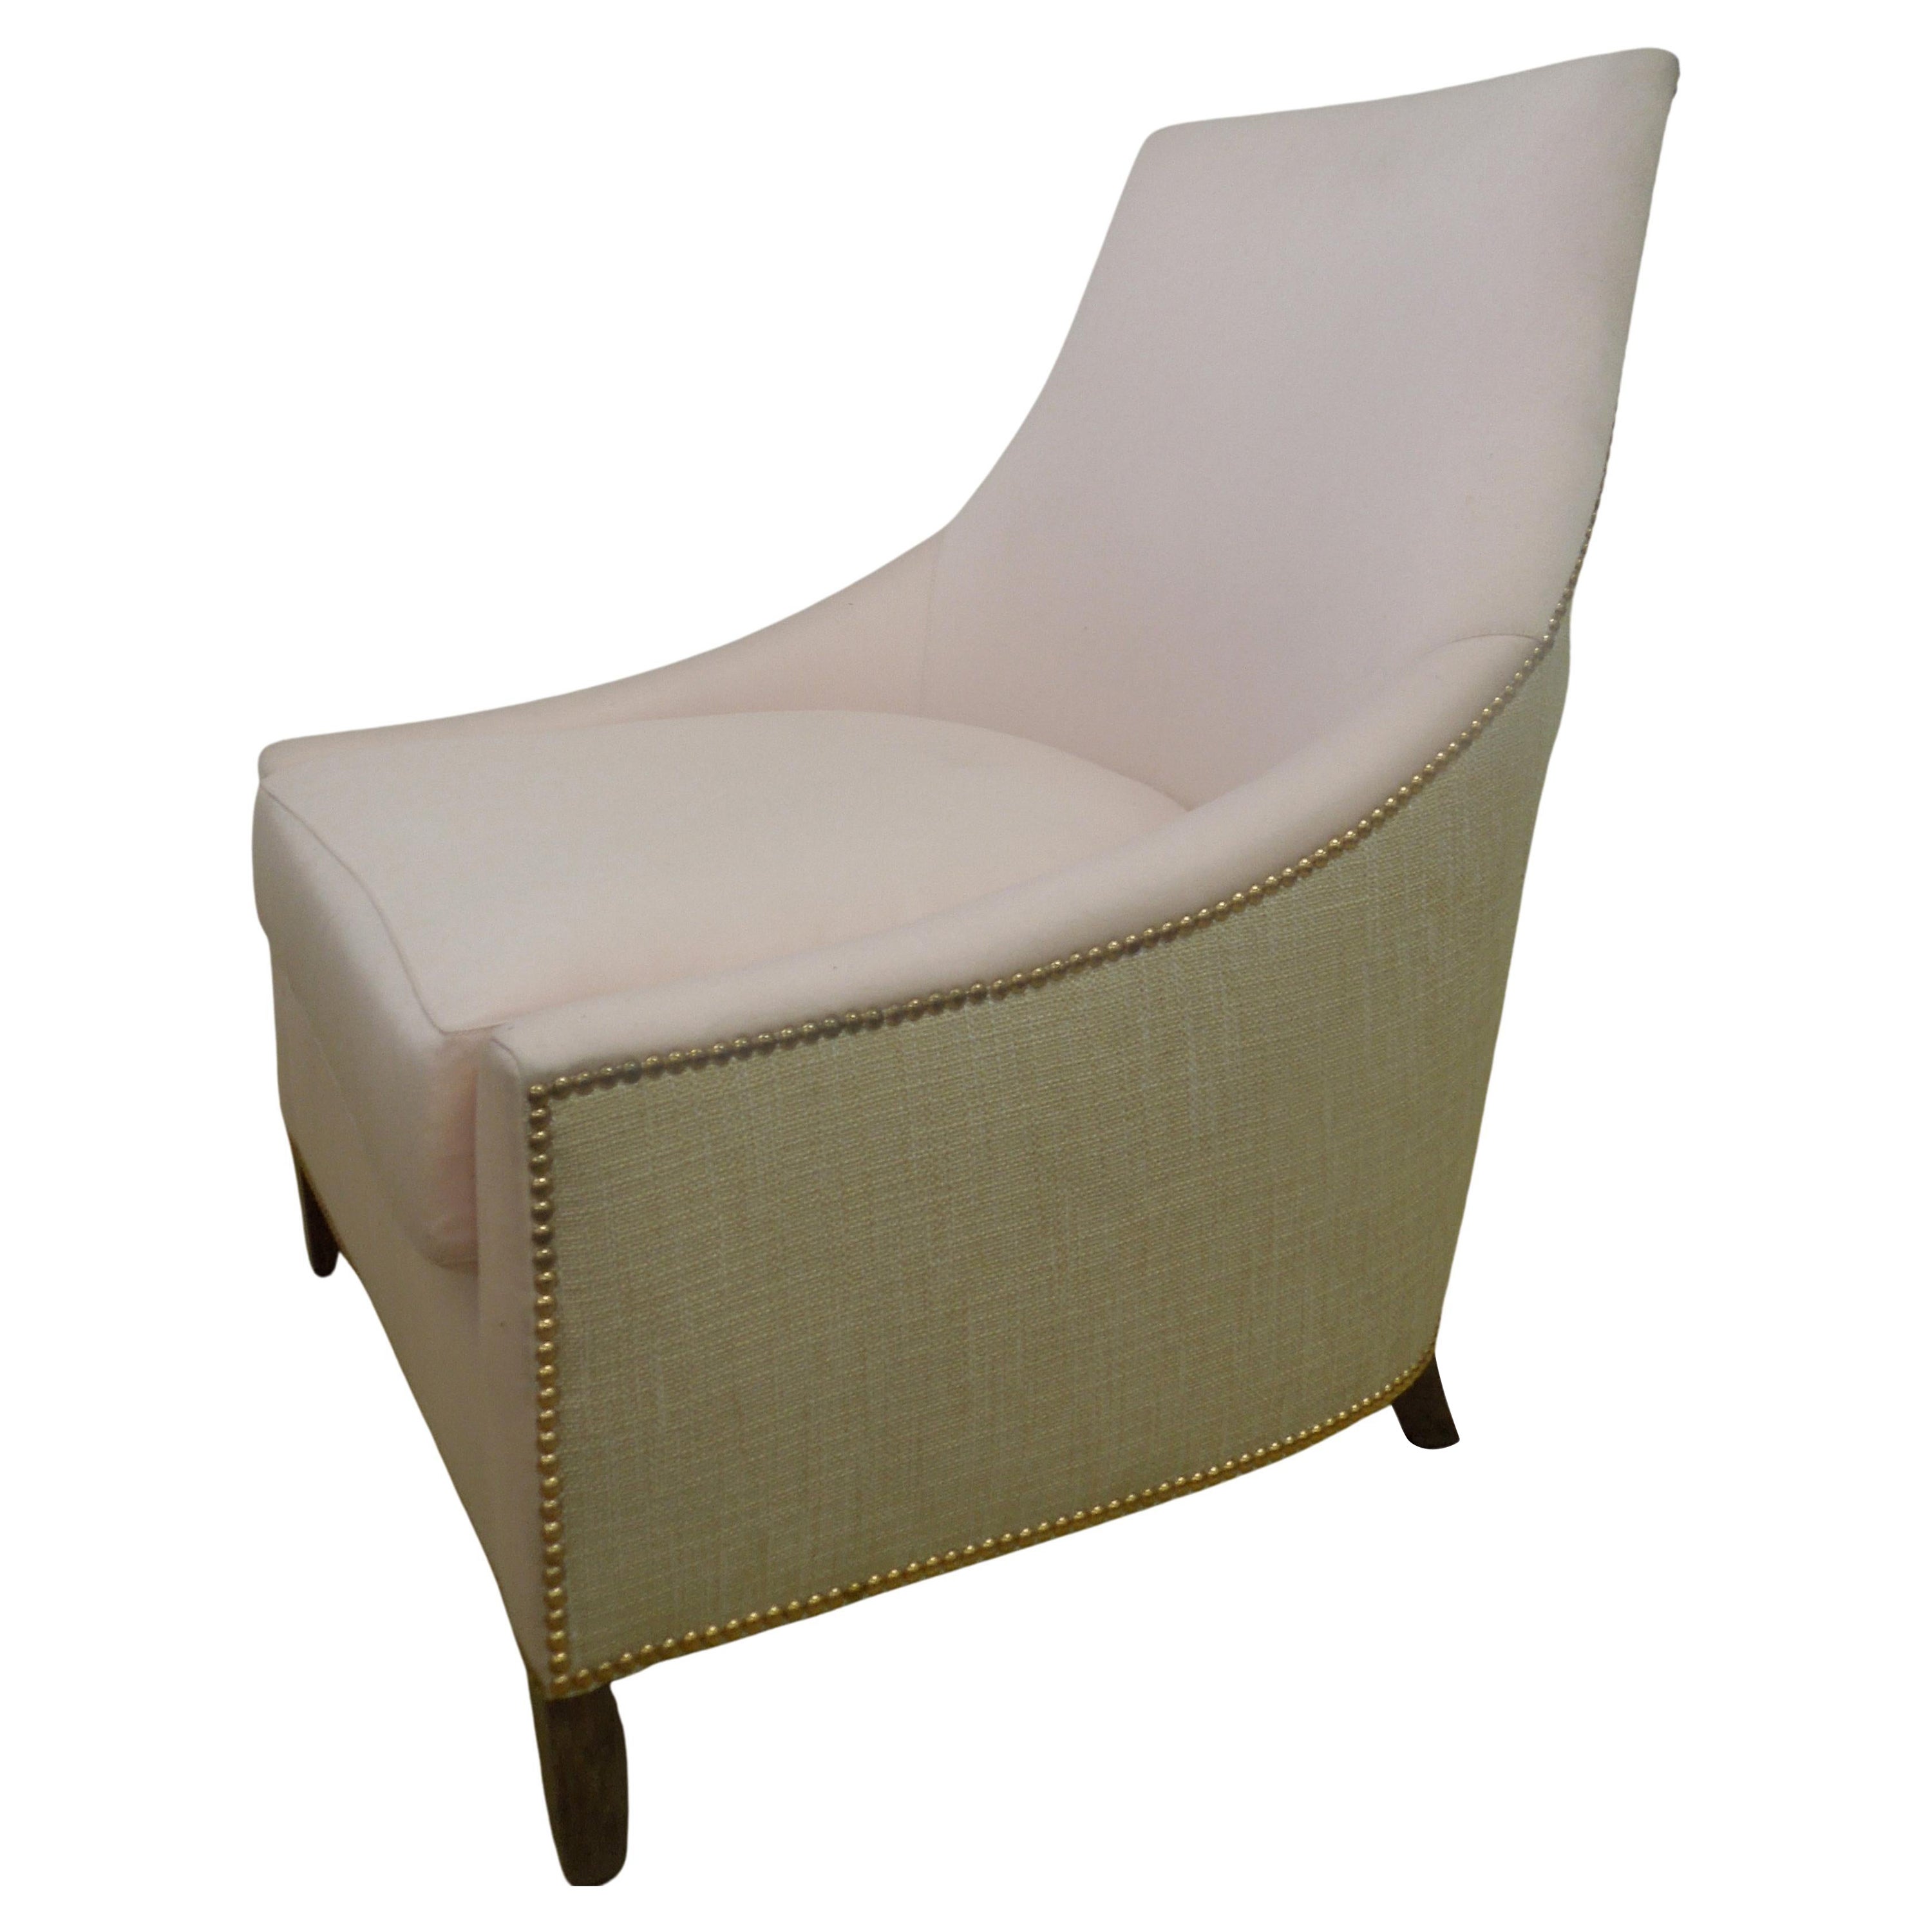  Fauteuil/chaise moderne « Fashionista » en tissu rose et lin brun clair